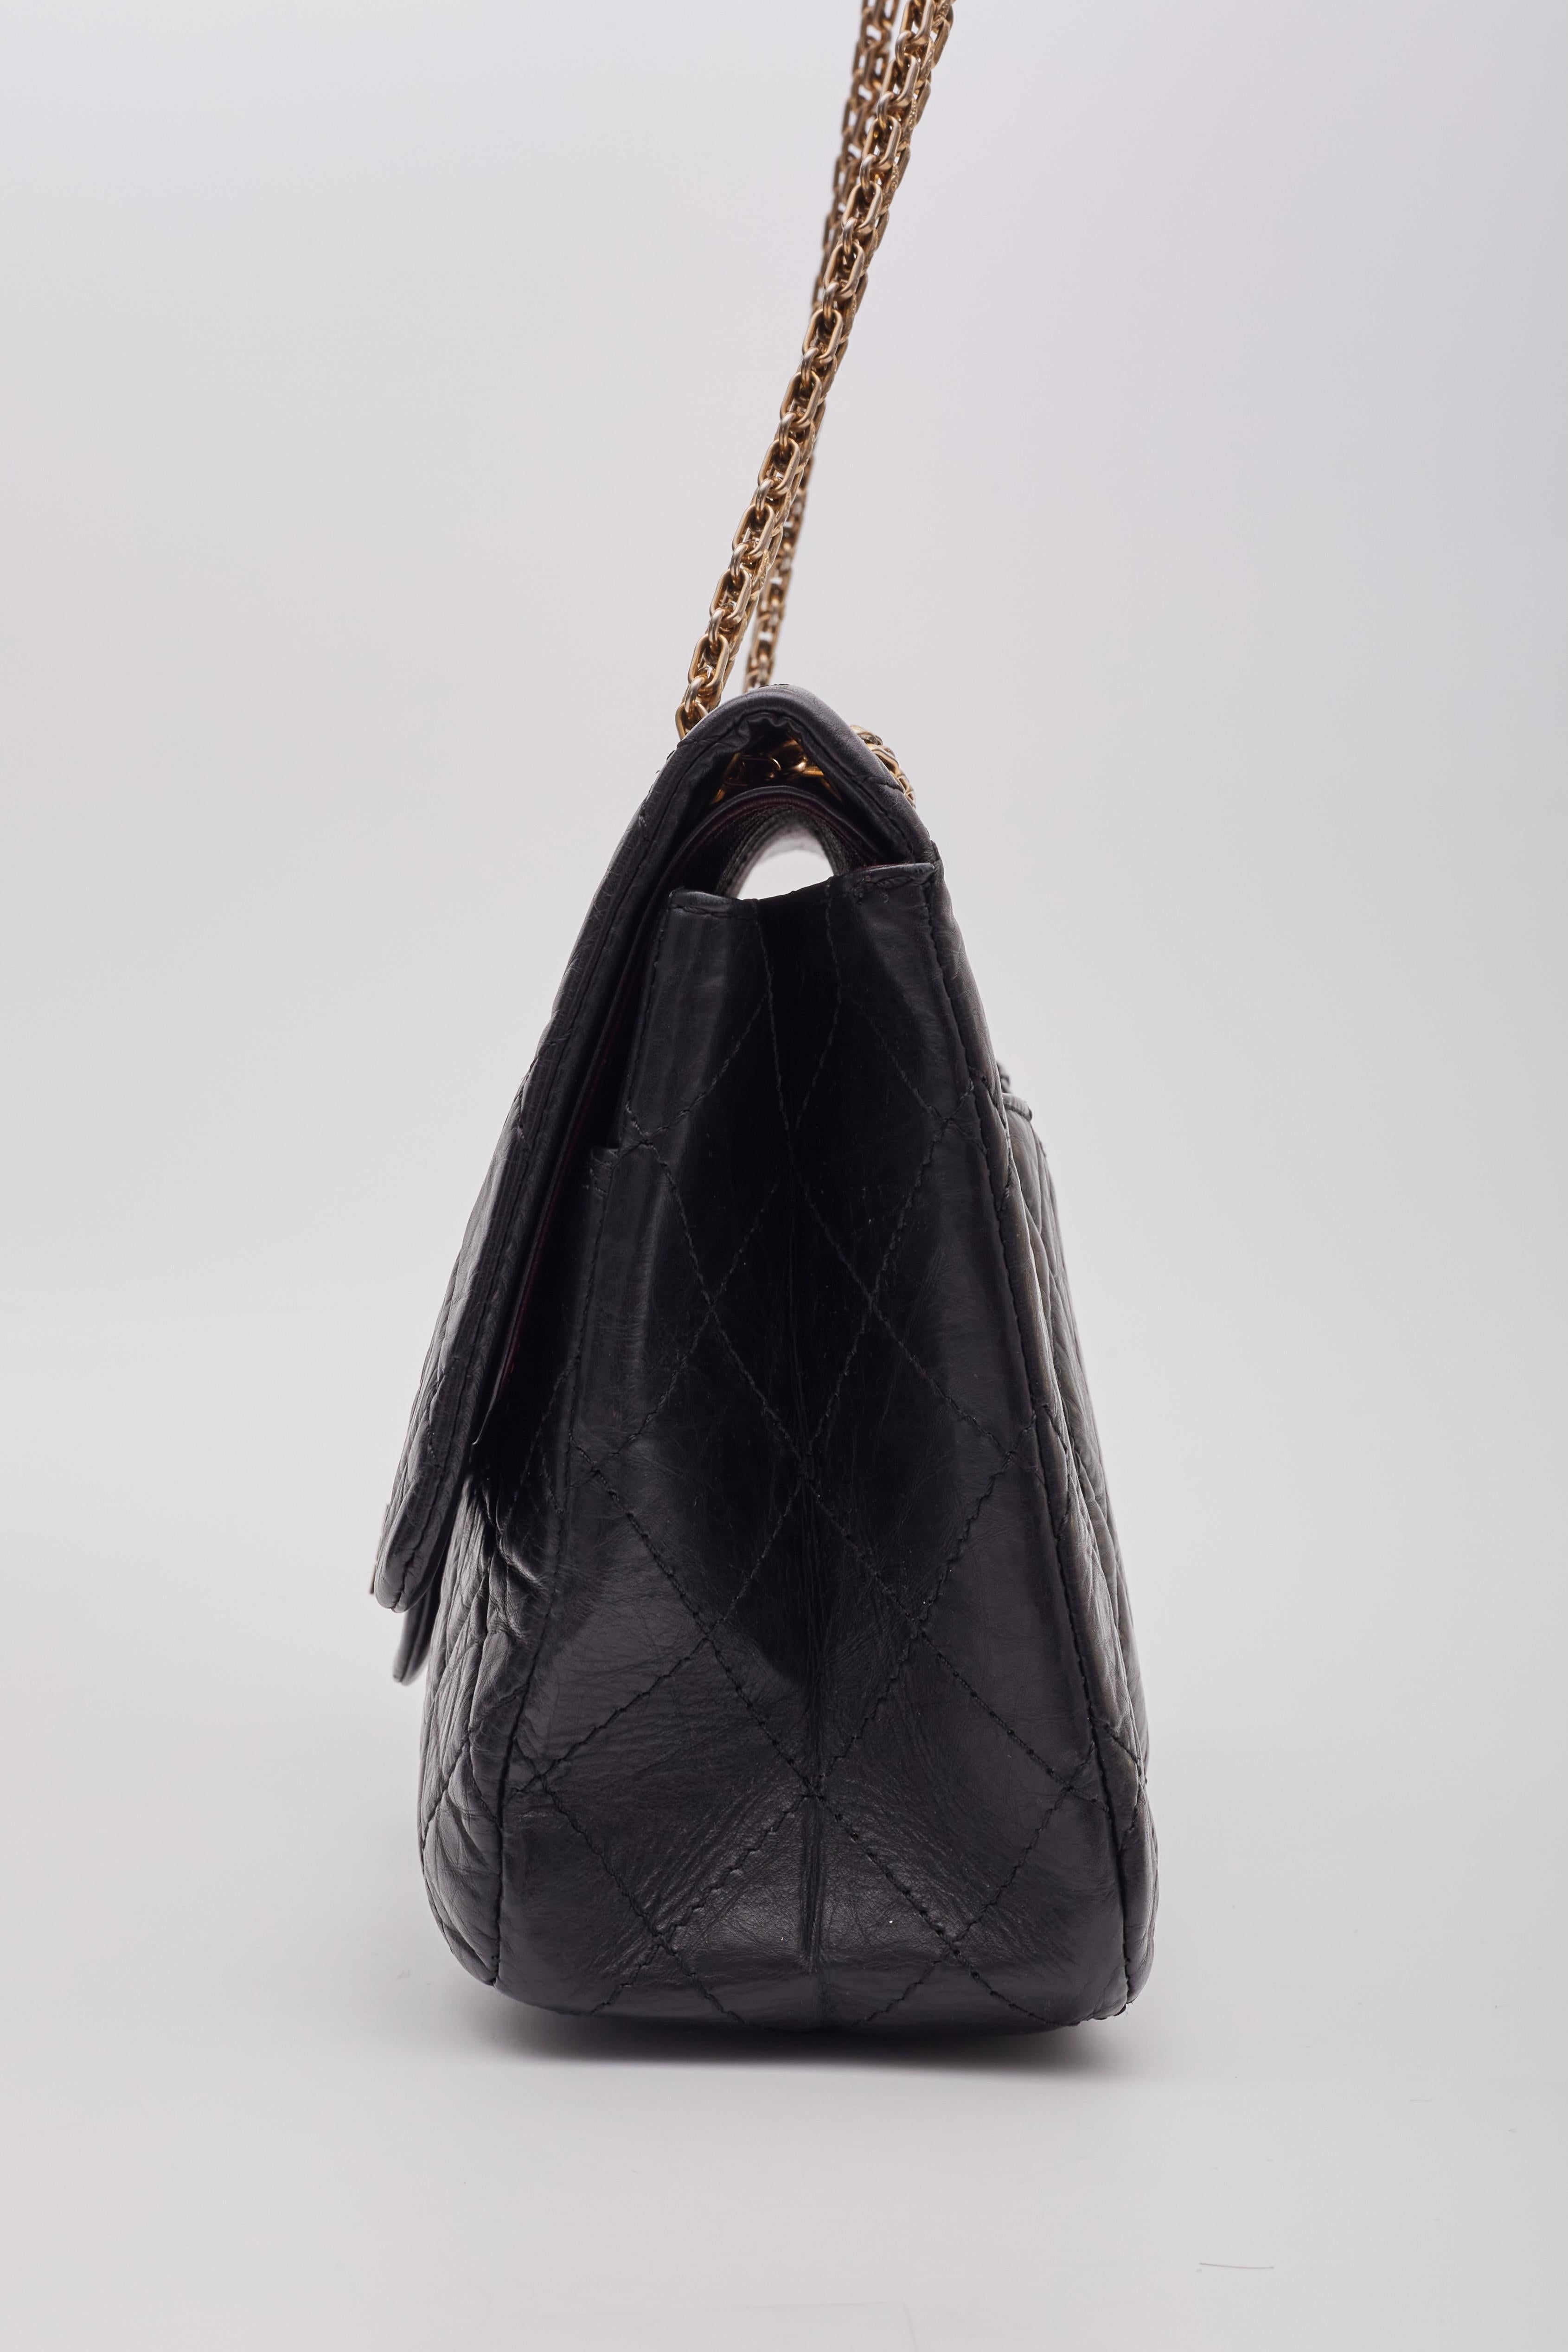 Chanel Calfskin Black Reissue 2.55 227 Flap Bag For Sale 3